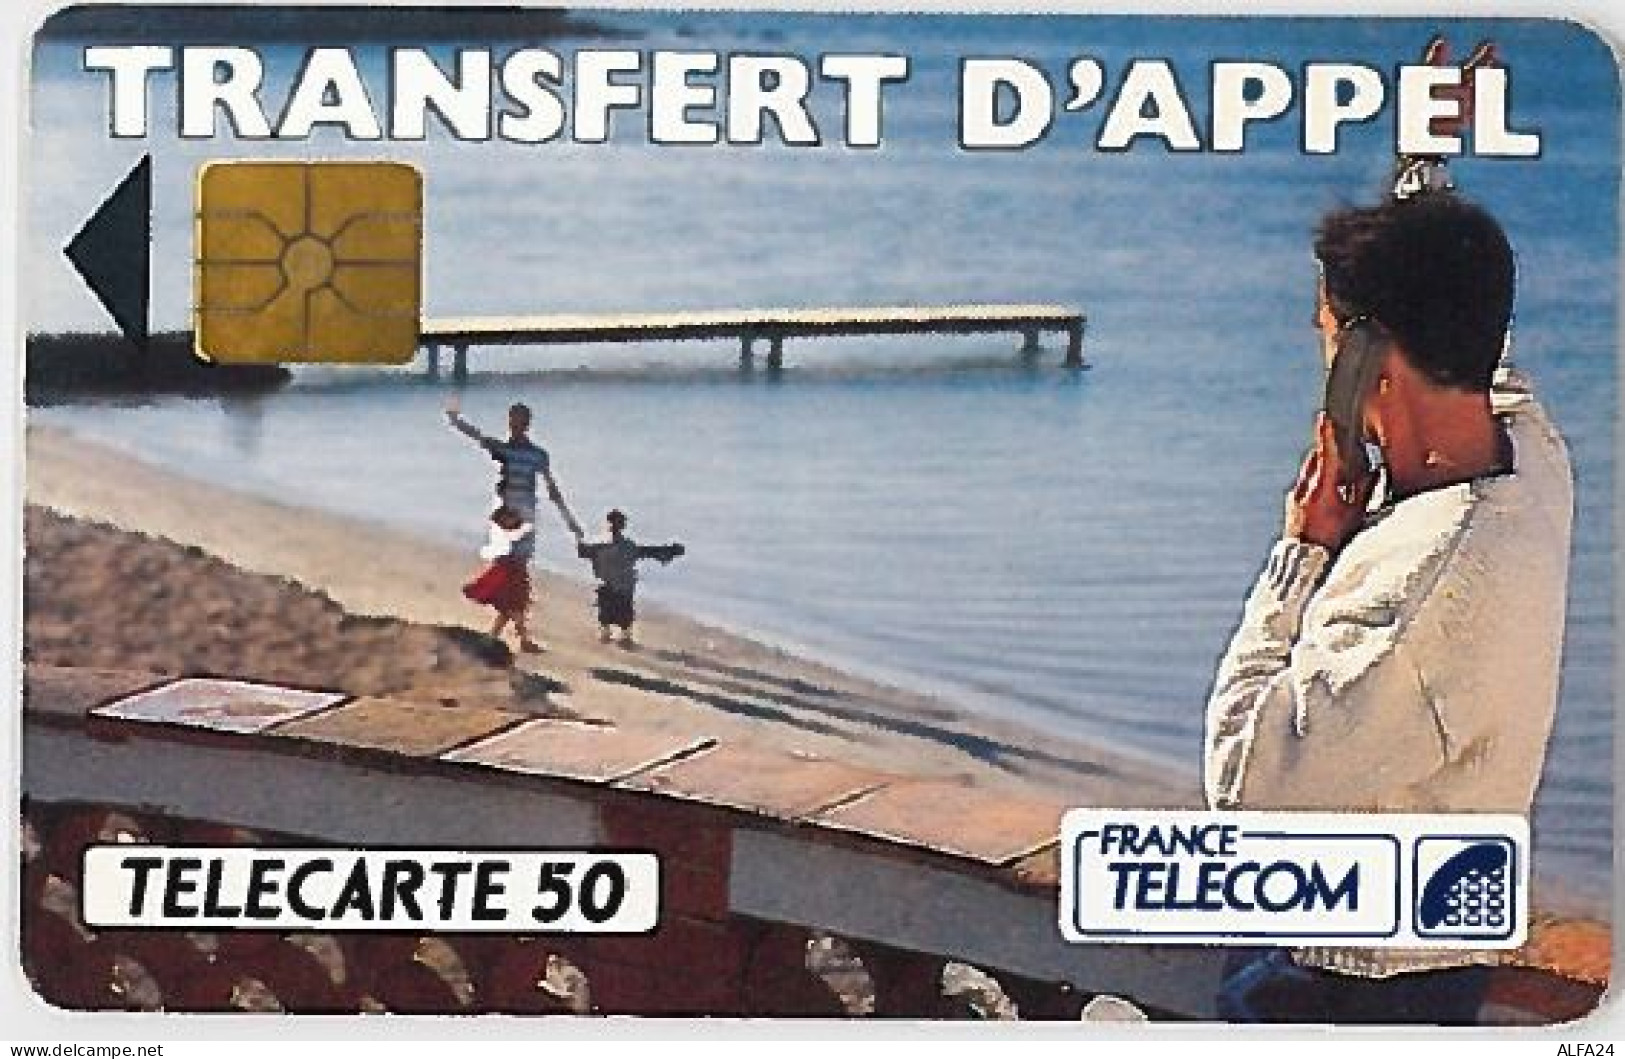 TELECARTE F275G 11-92 TRANSFERT D'APPEL (2) - 1992